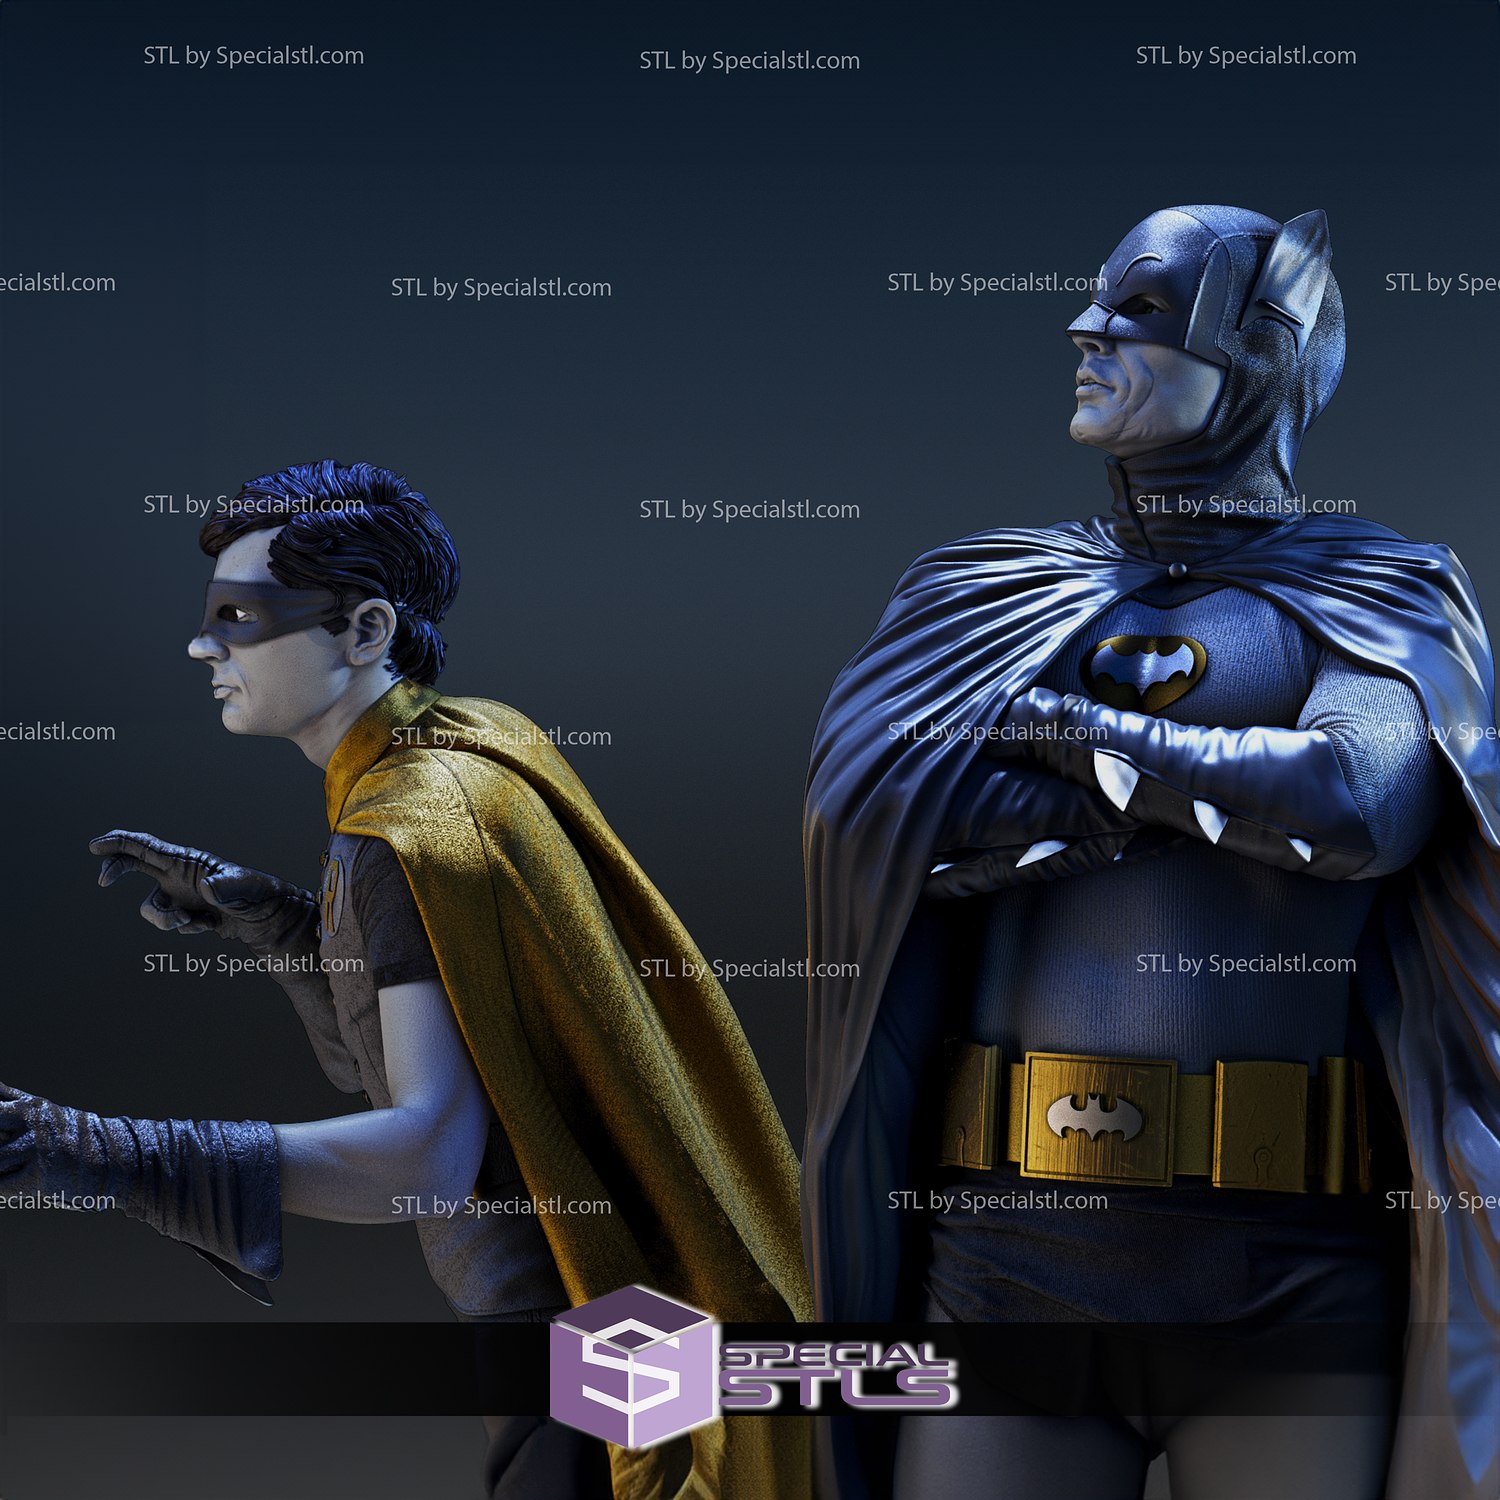 Batman and Robin Old School Diorama 3D Print STL Files